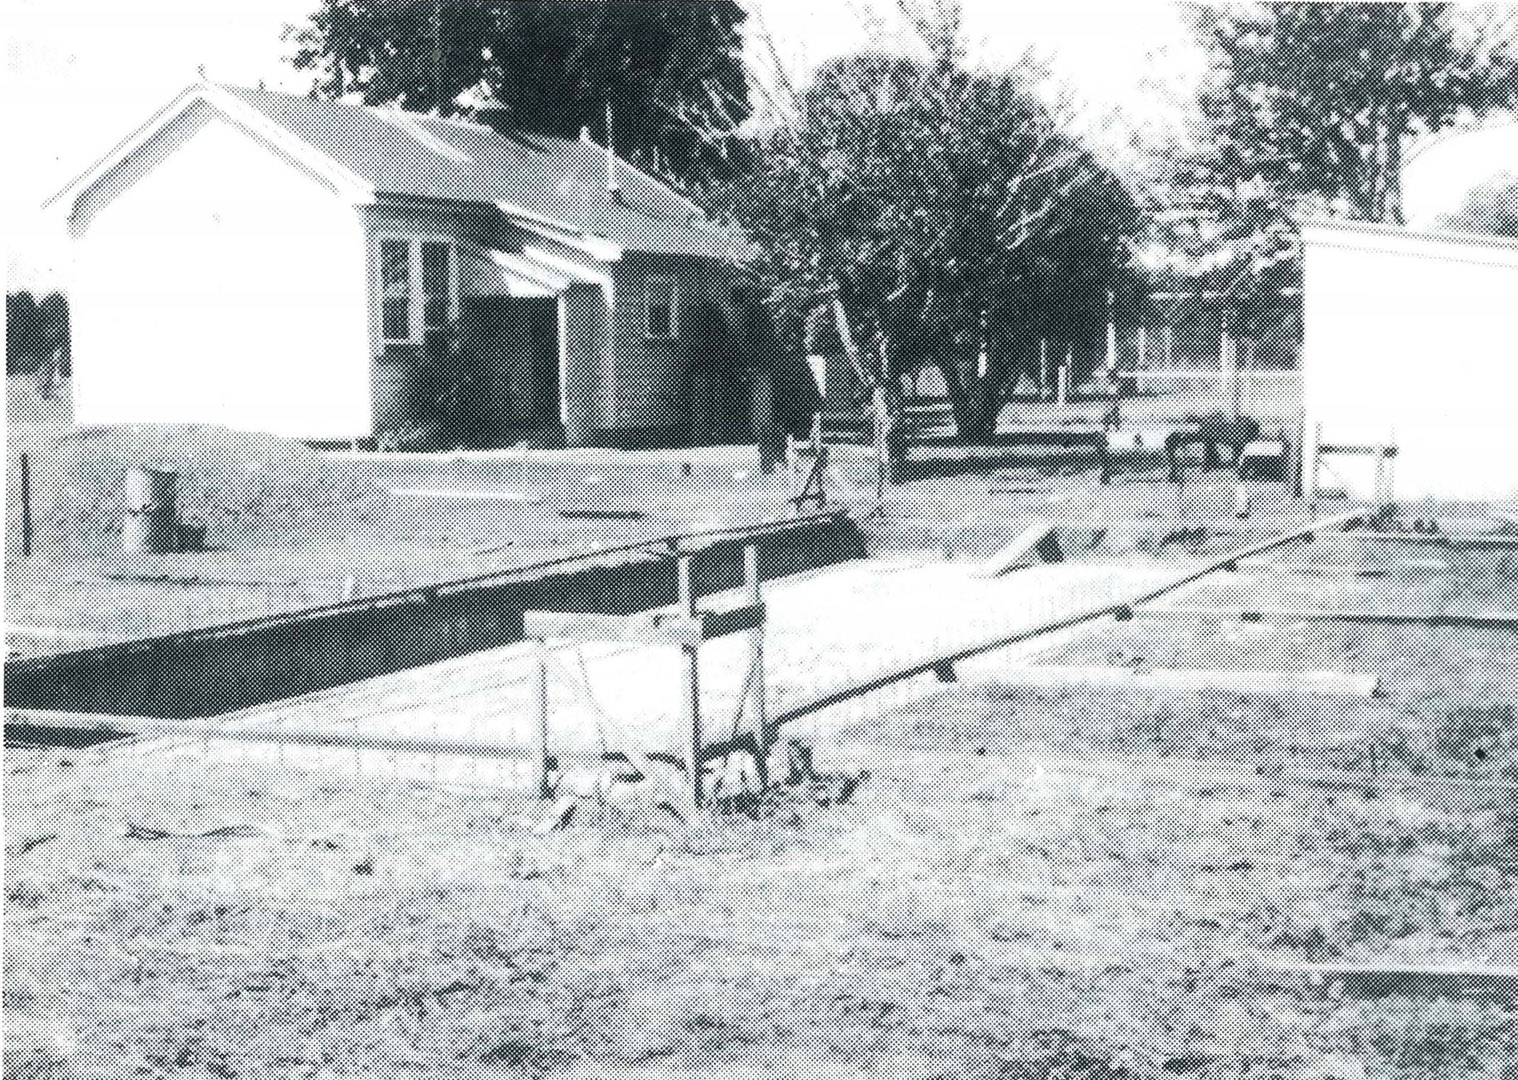 Construction of school swimming pool 1955-56